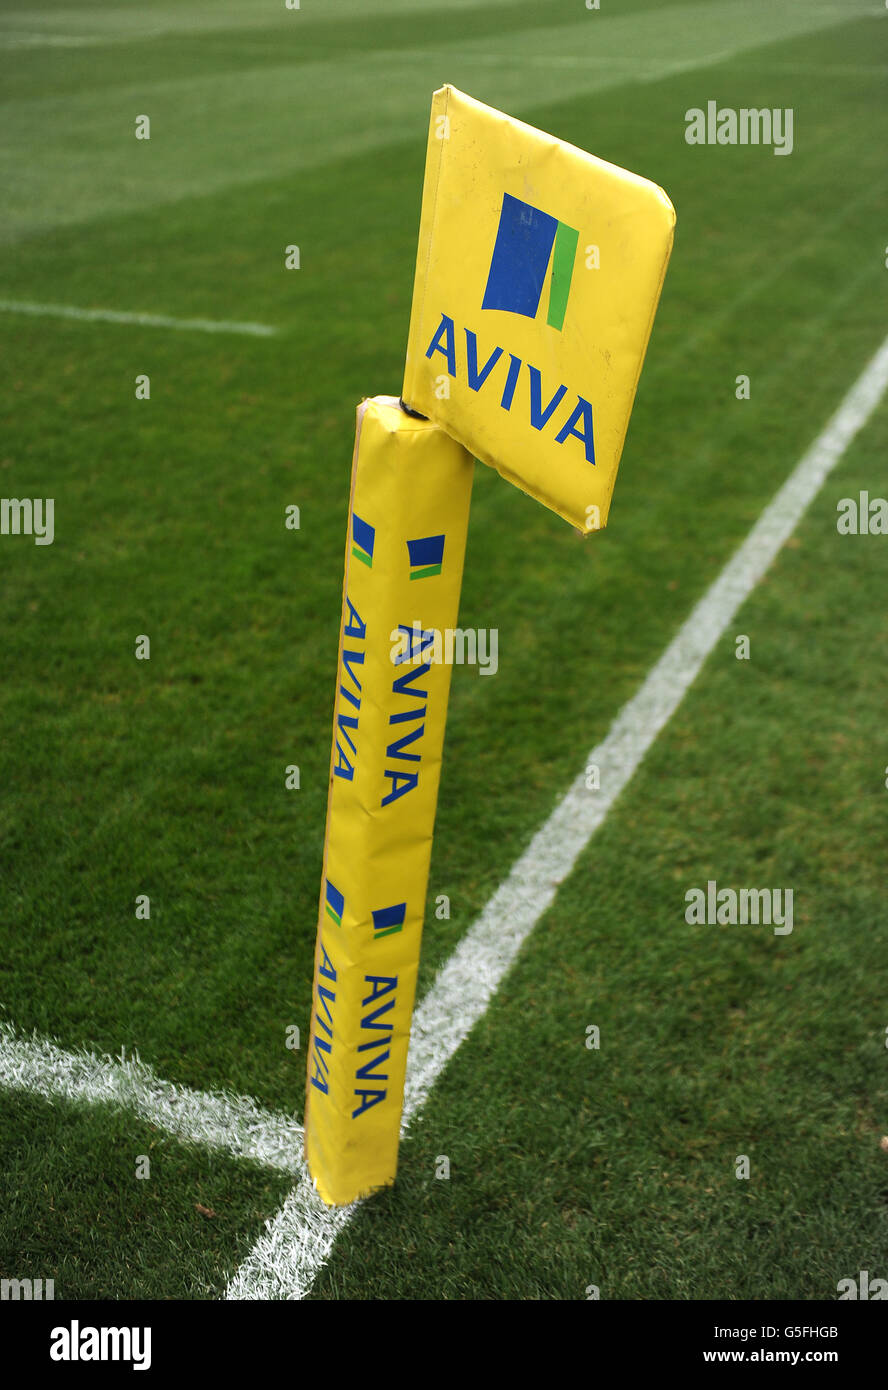 Rugby Union - Aviva Premiership - Harlequins v London Saracens - Twickenham Stoop Stock Photo